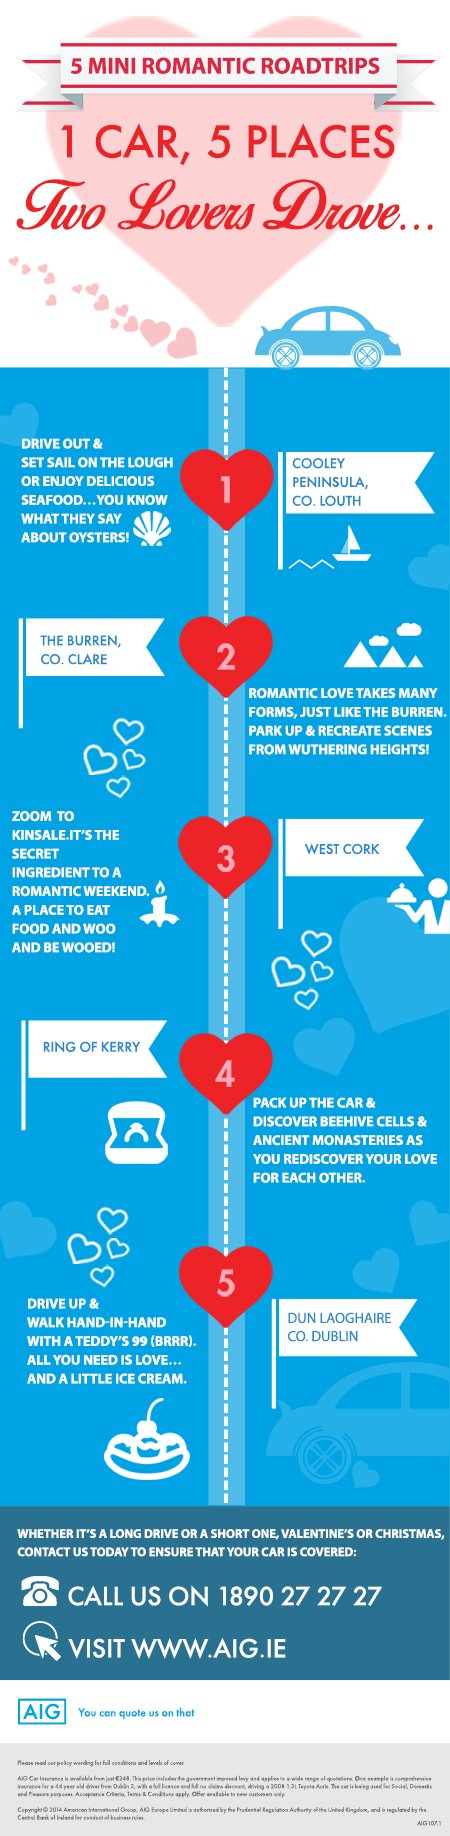 5 mini romantic road trips infographic